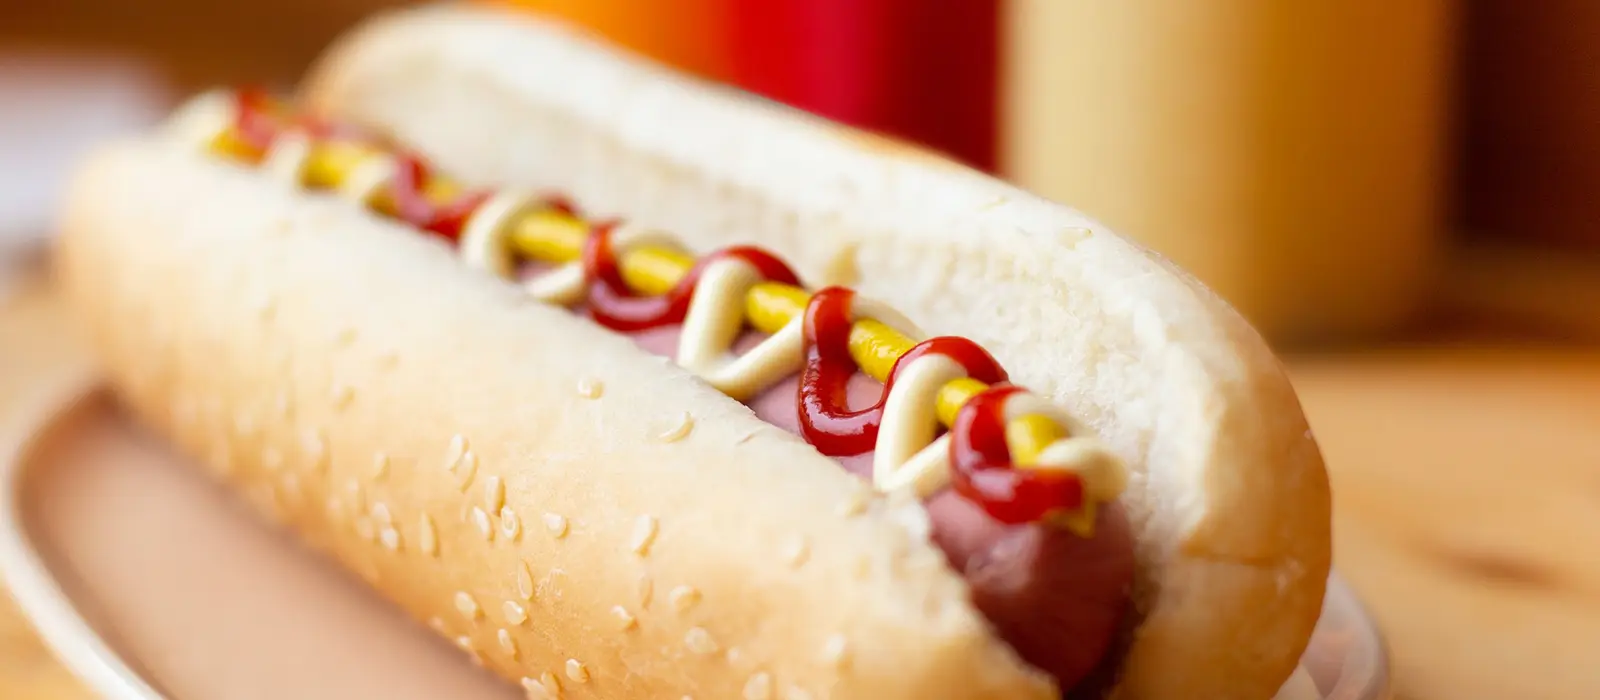 Hotdog with mustard and tomato sauce